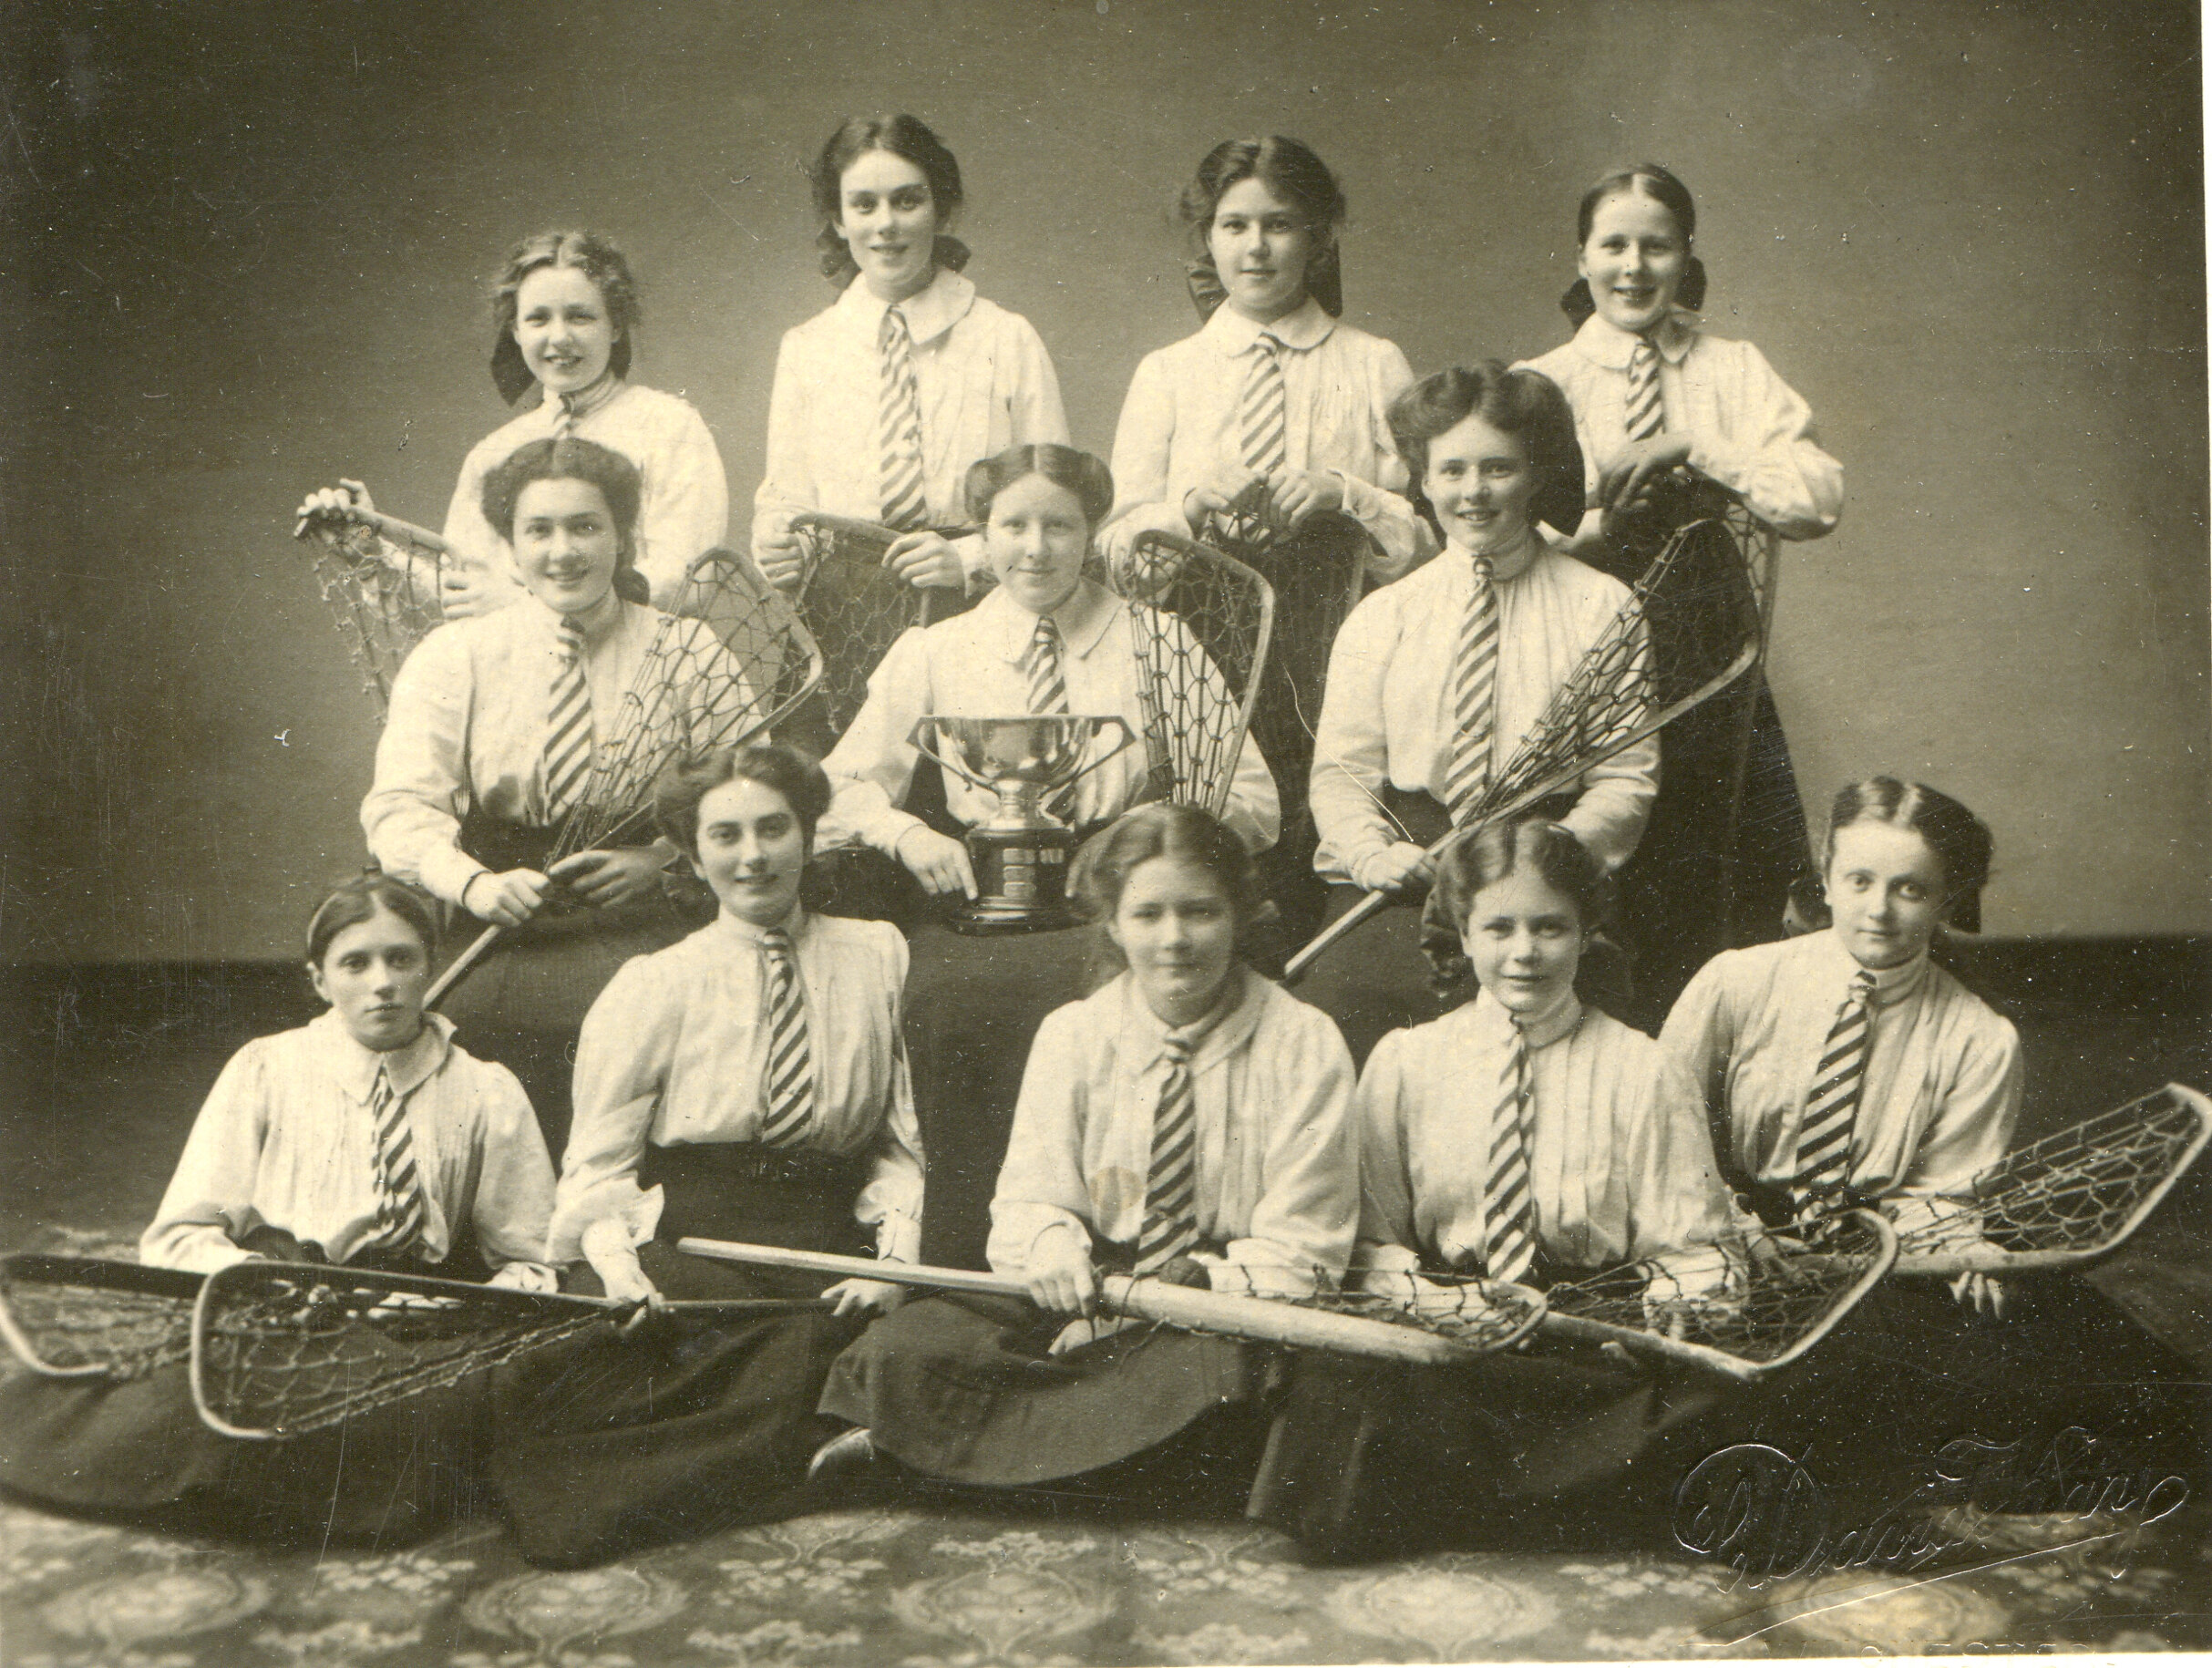  The Lacross team, 1911 